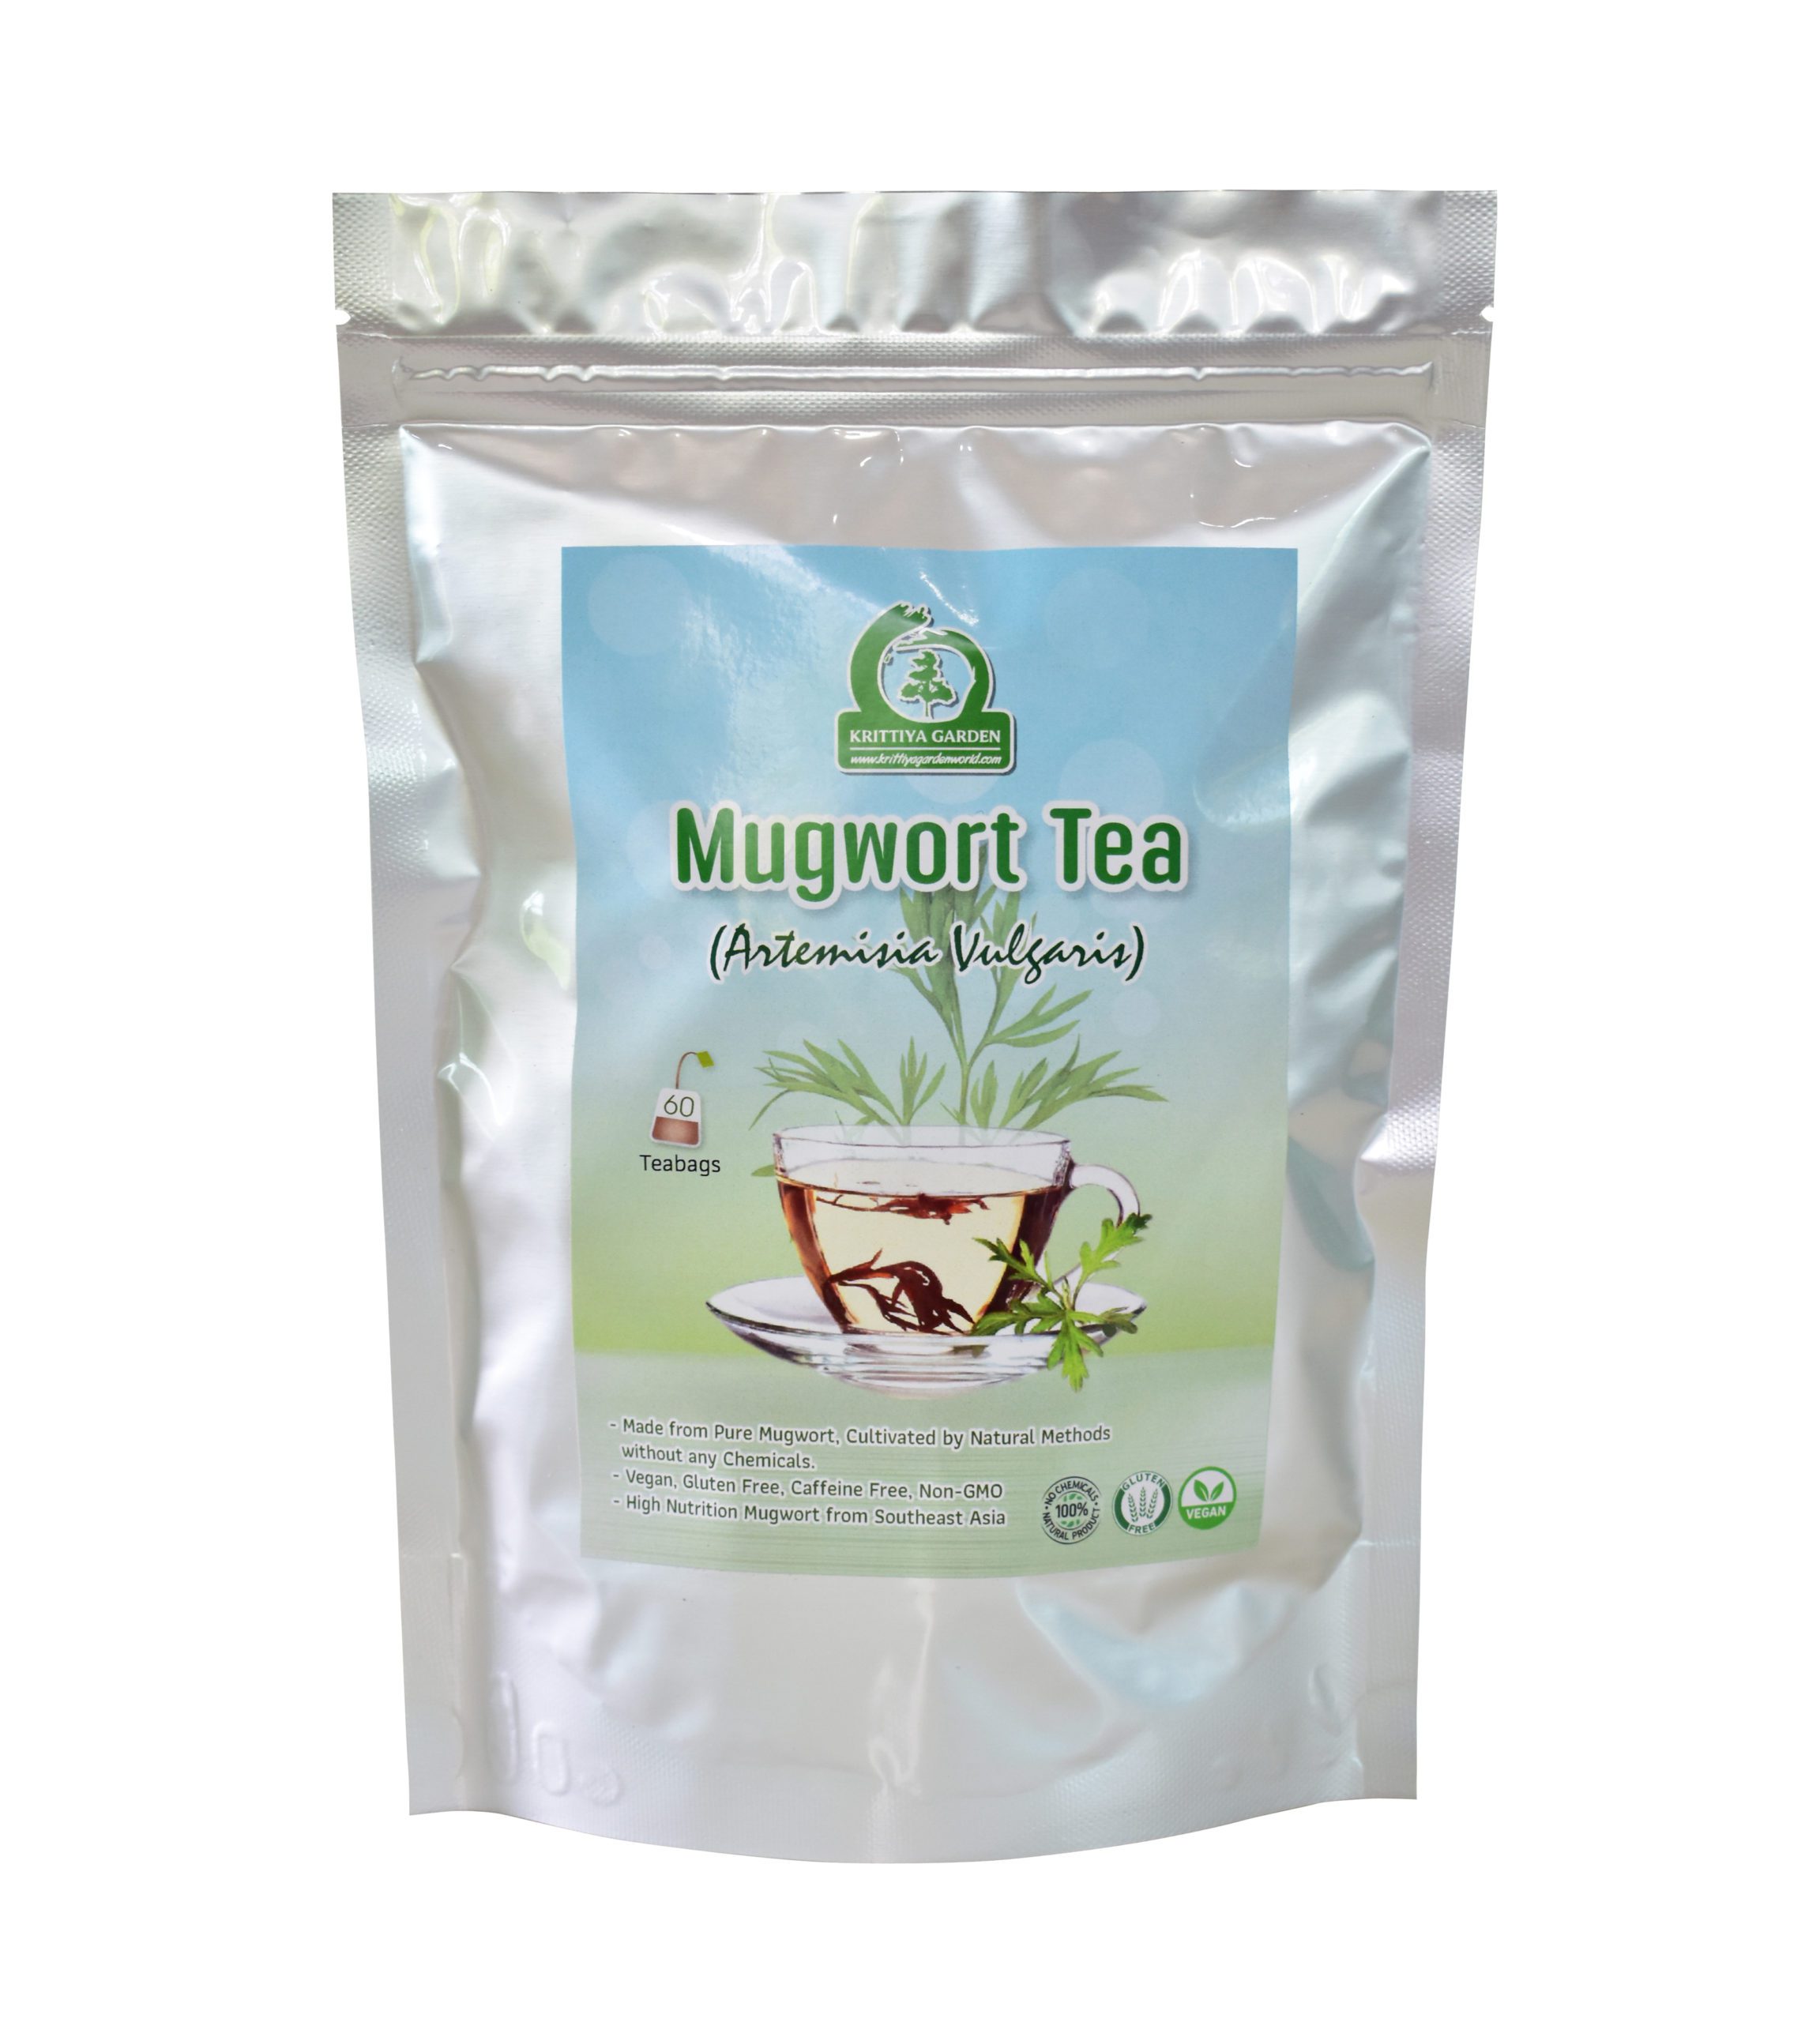 Mugwort Tea 60-Teabags (Artemisia Vulgaris) 3.2oz - Krittiya Garden World